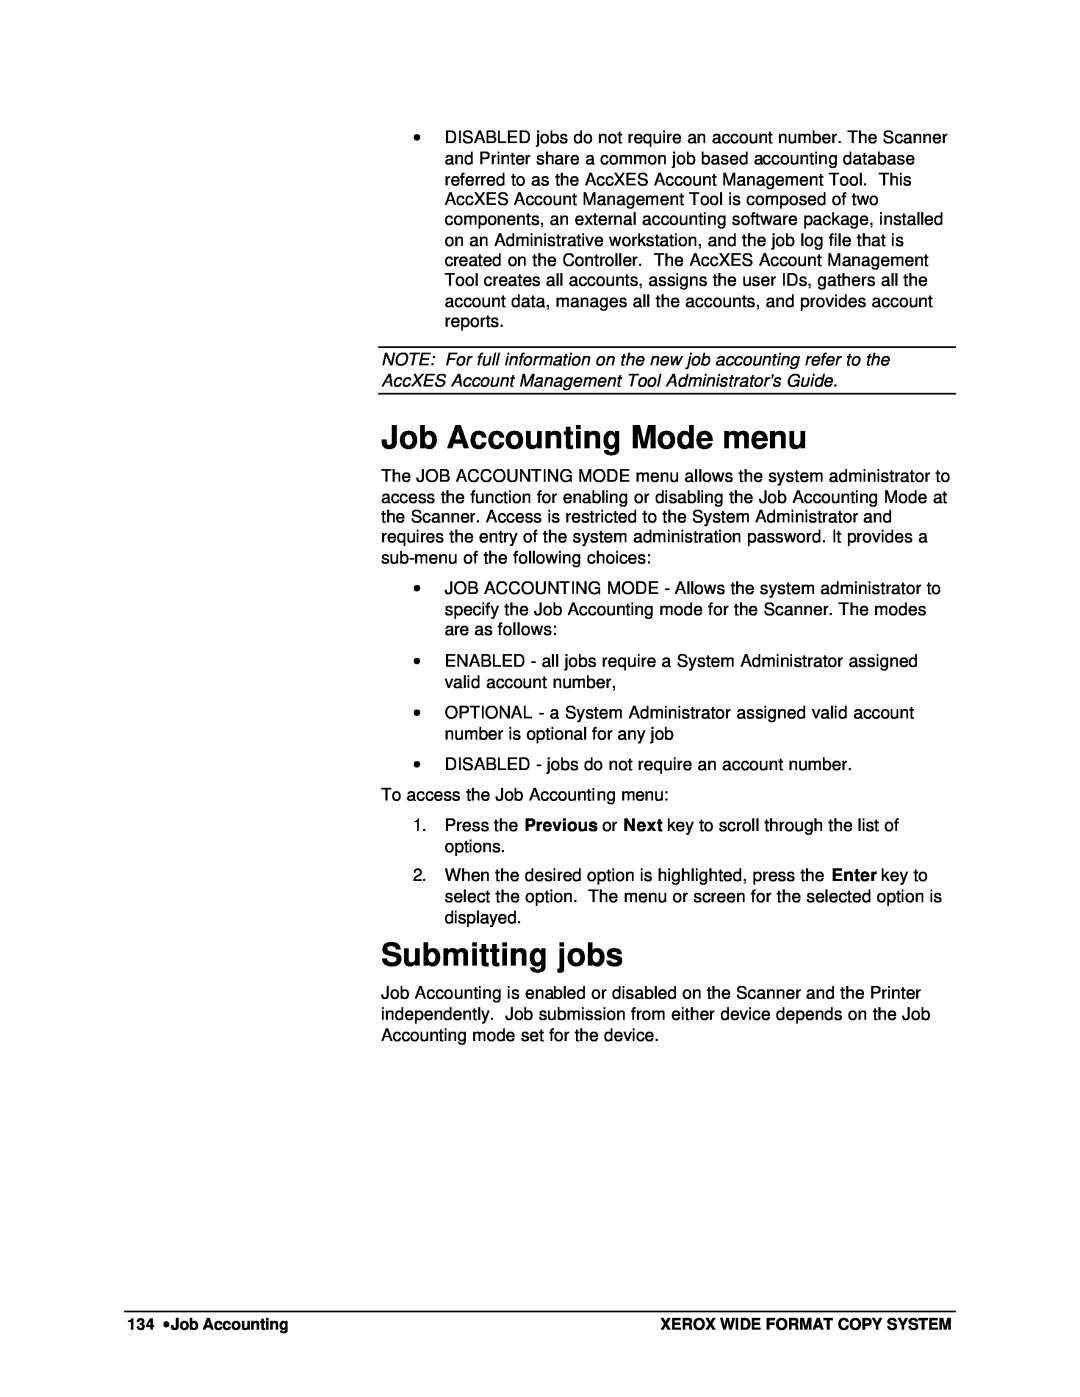 Xerox 8825, 8850, 8830, X2 manual Job Accounting Mode menu, Submitting jobs 